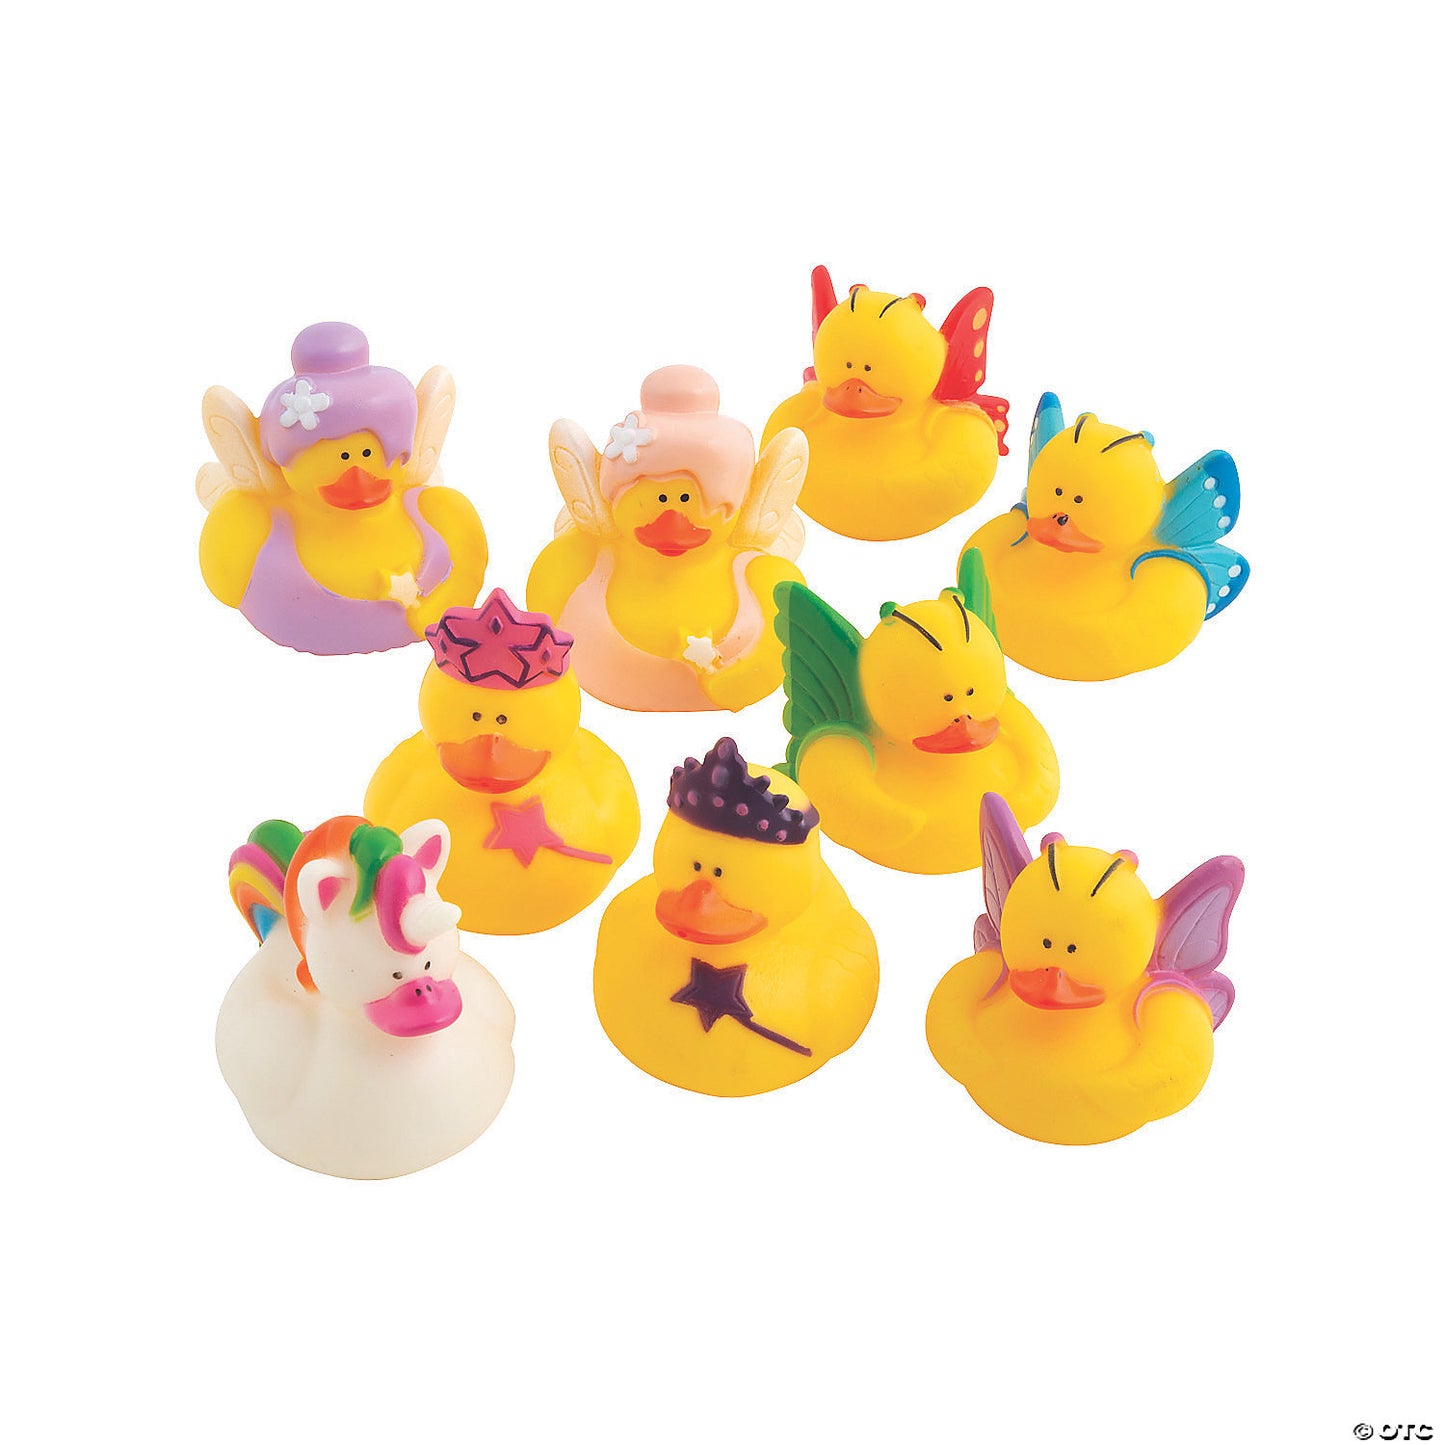 Cute Rubber Ducks Assortment - 48 pcs